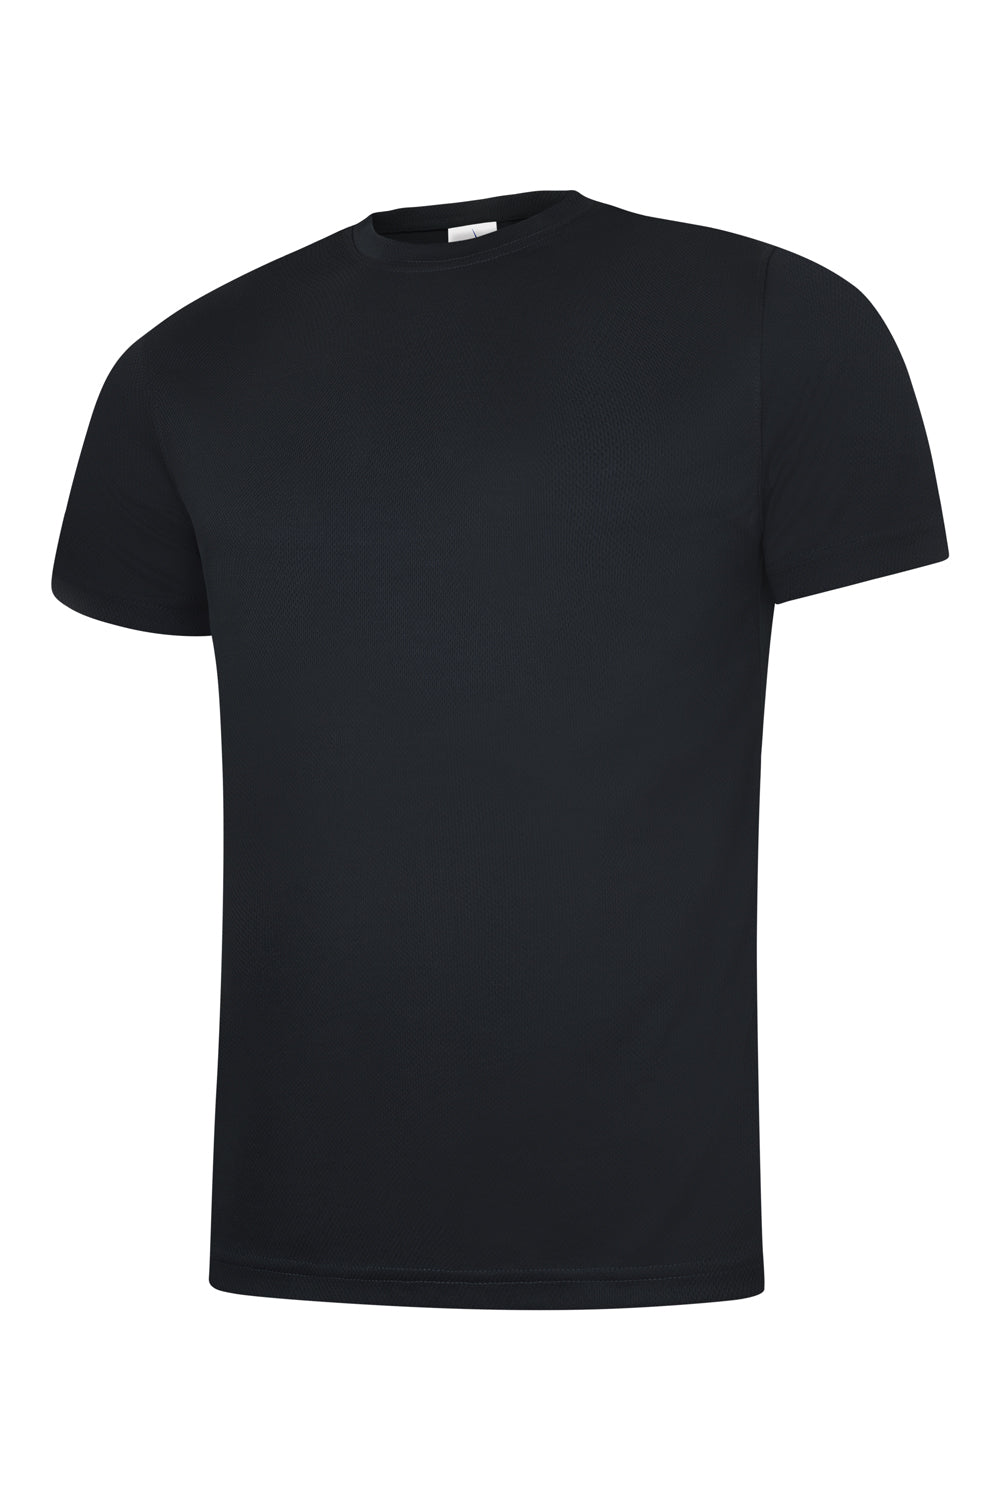 Uneek Mens Ultra Cool T Shirt UC315 - Black